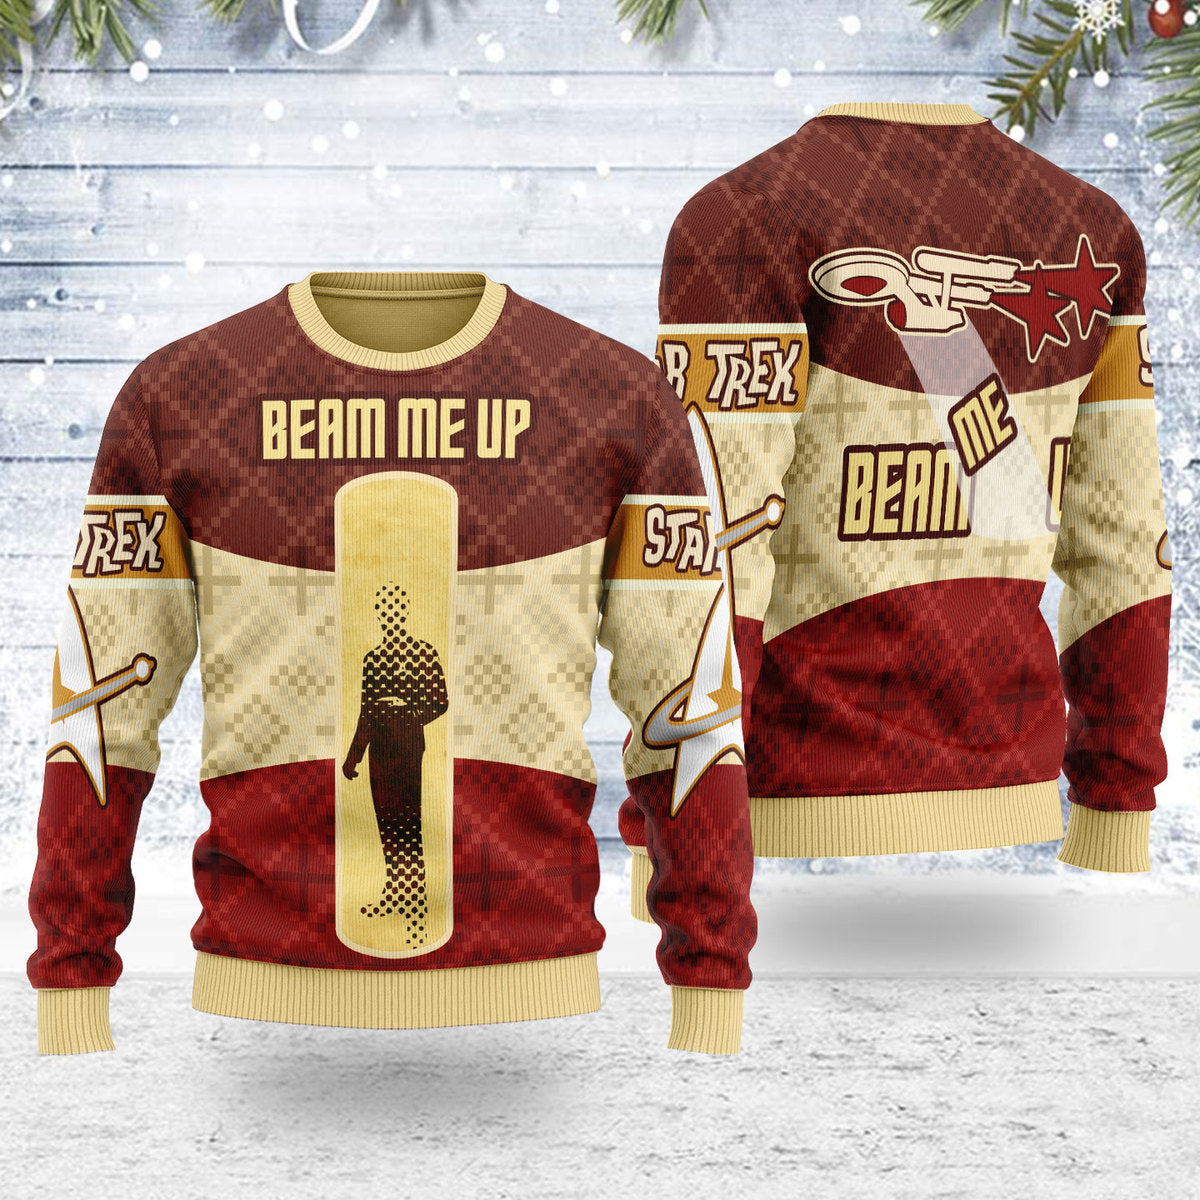 Star Trek Beam Me Up Christmas - Sweater - Ugly Christmas Sweater